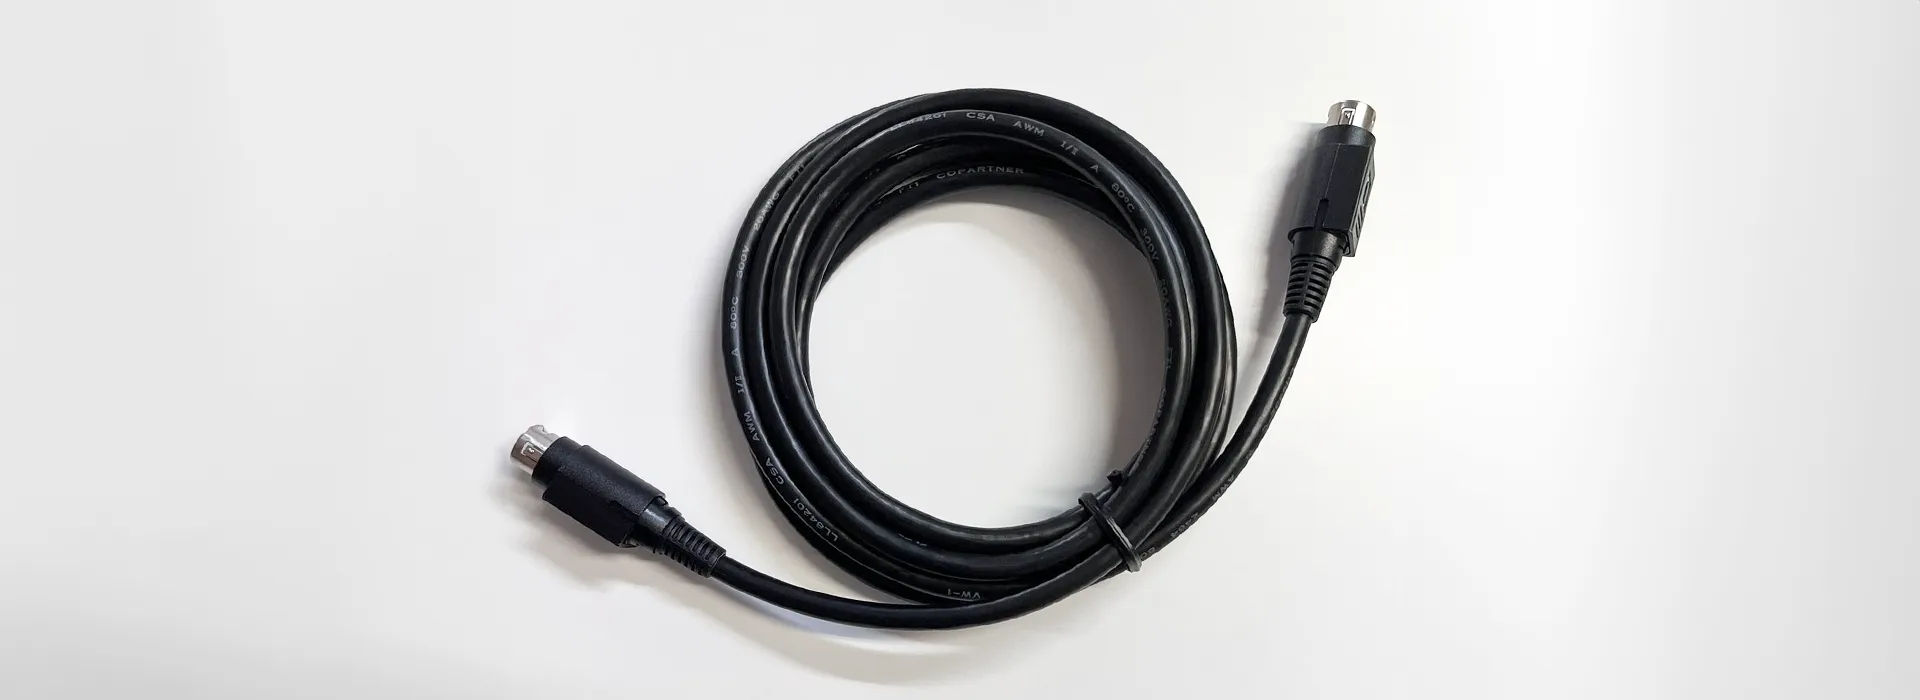 Rega Kabel zu TT-PSU